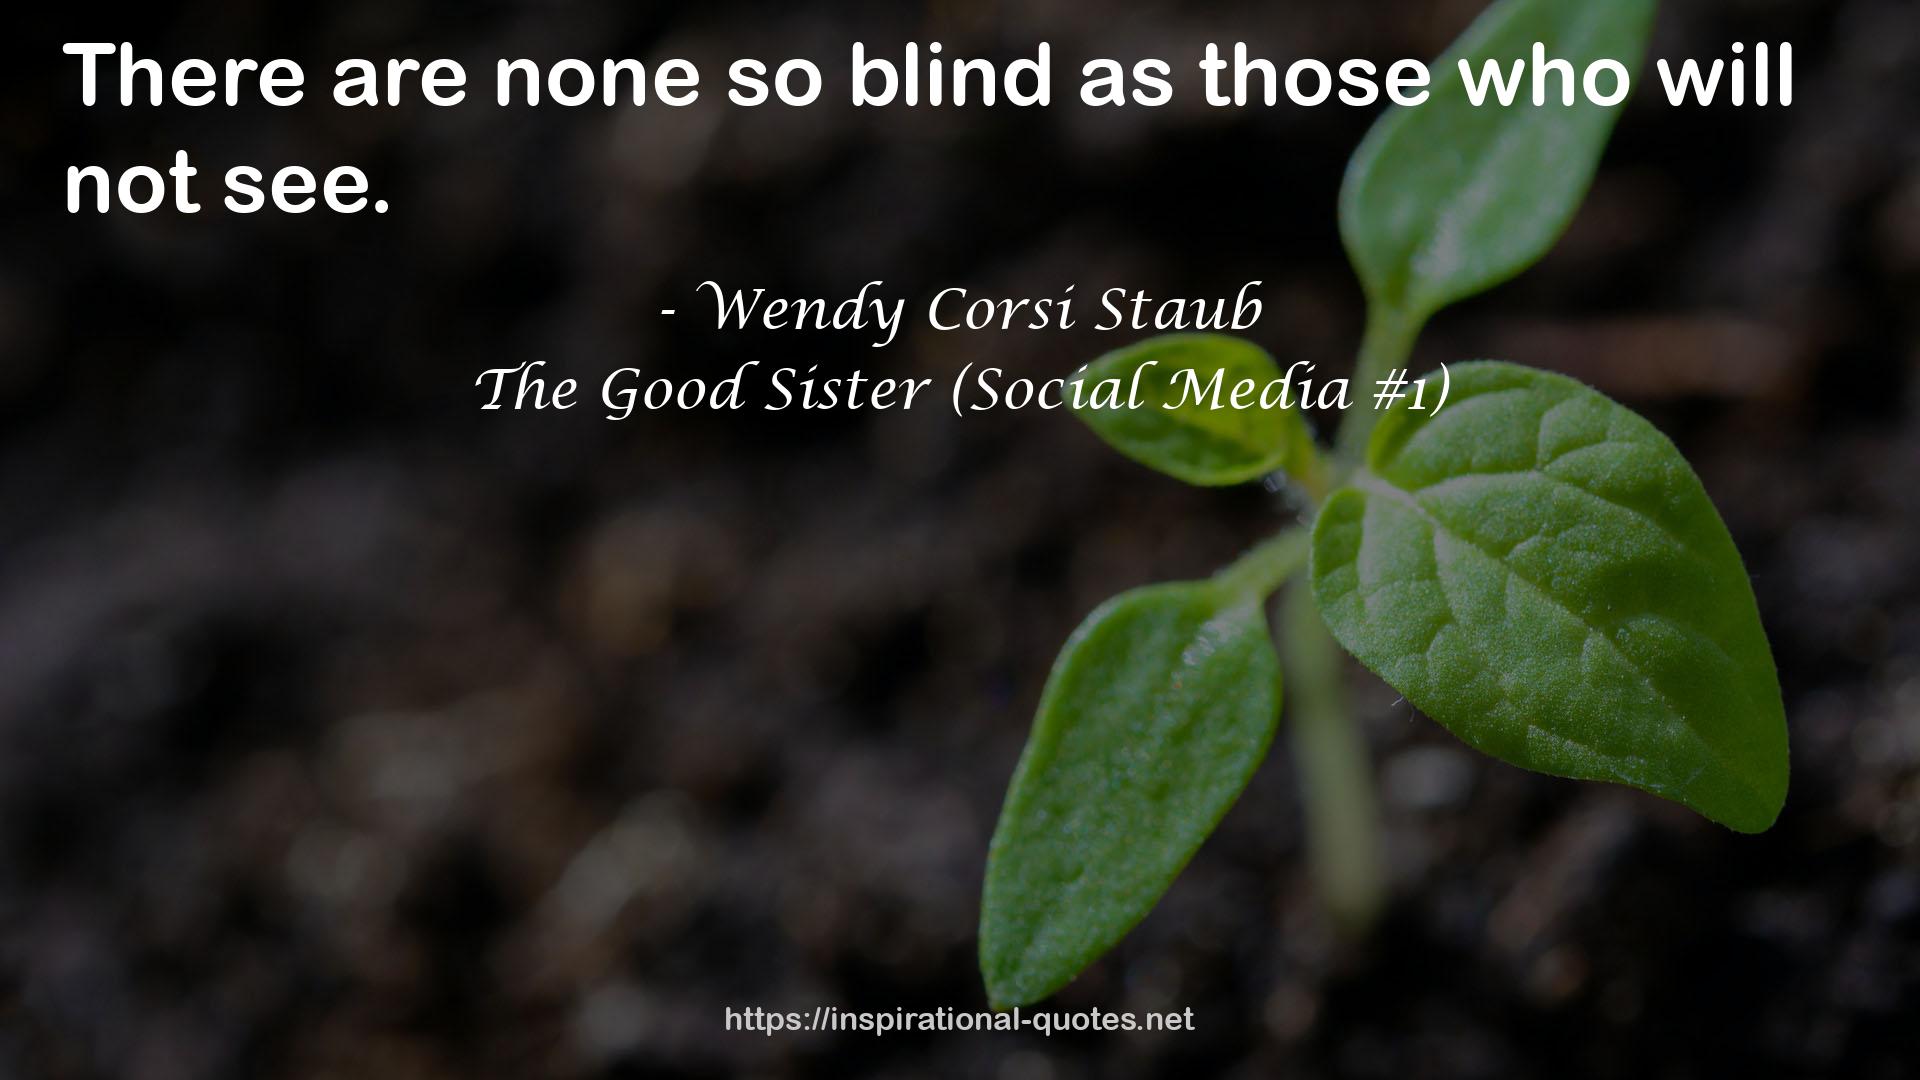 The Good Sister (Social Media #1) QUOTES